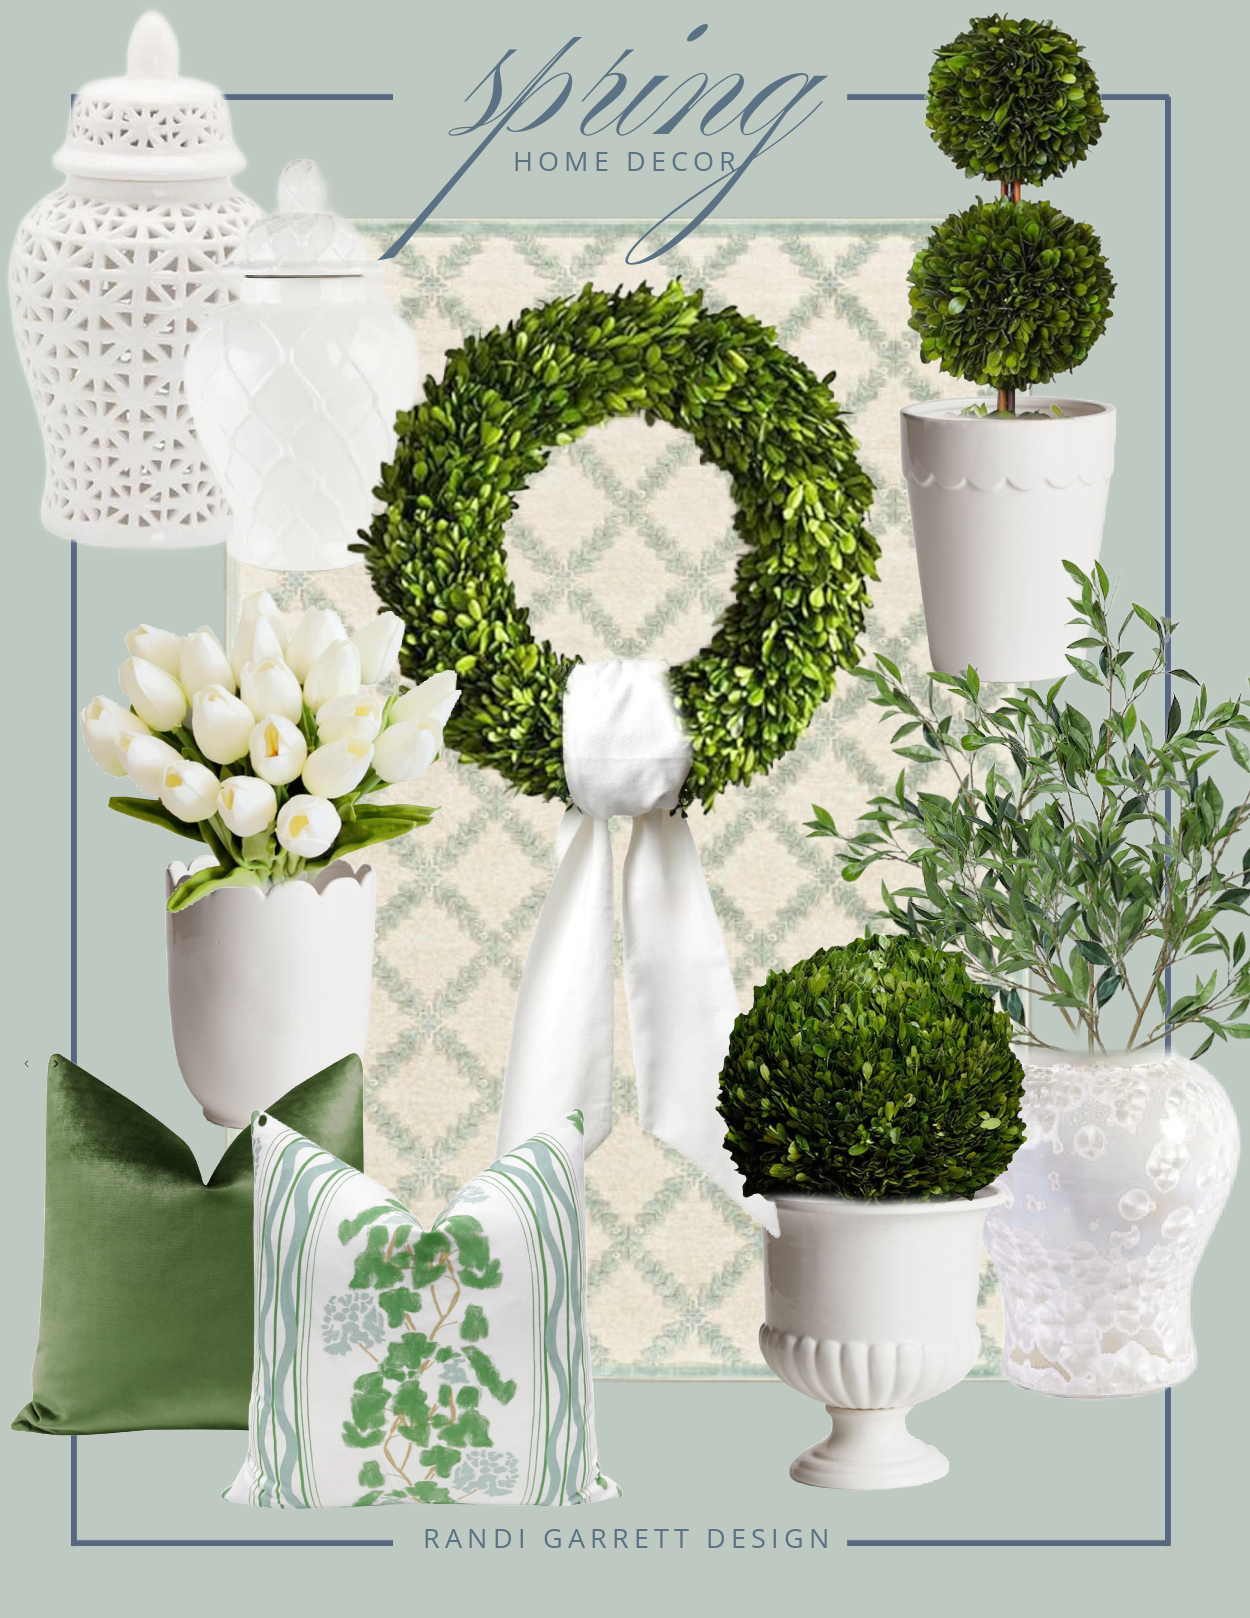 Green and white spring decor ideas